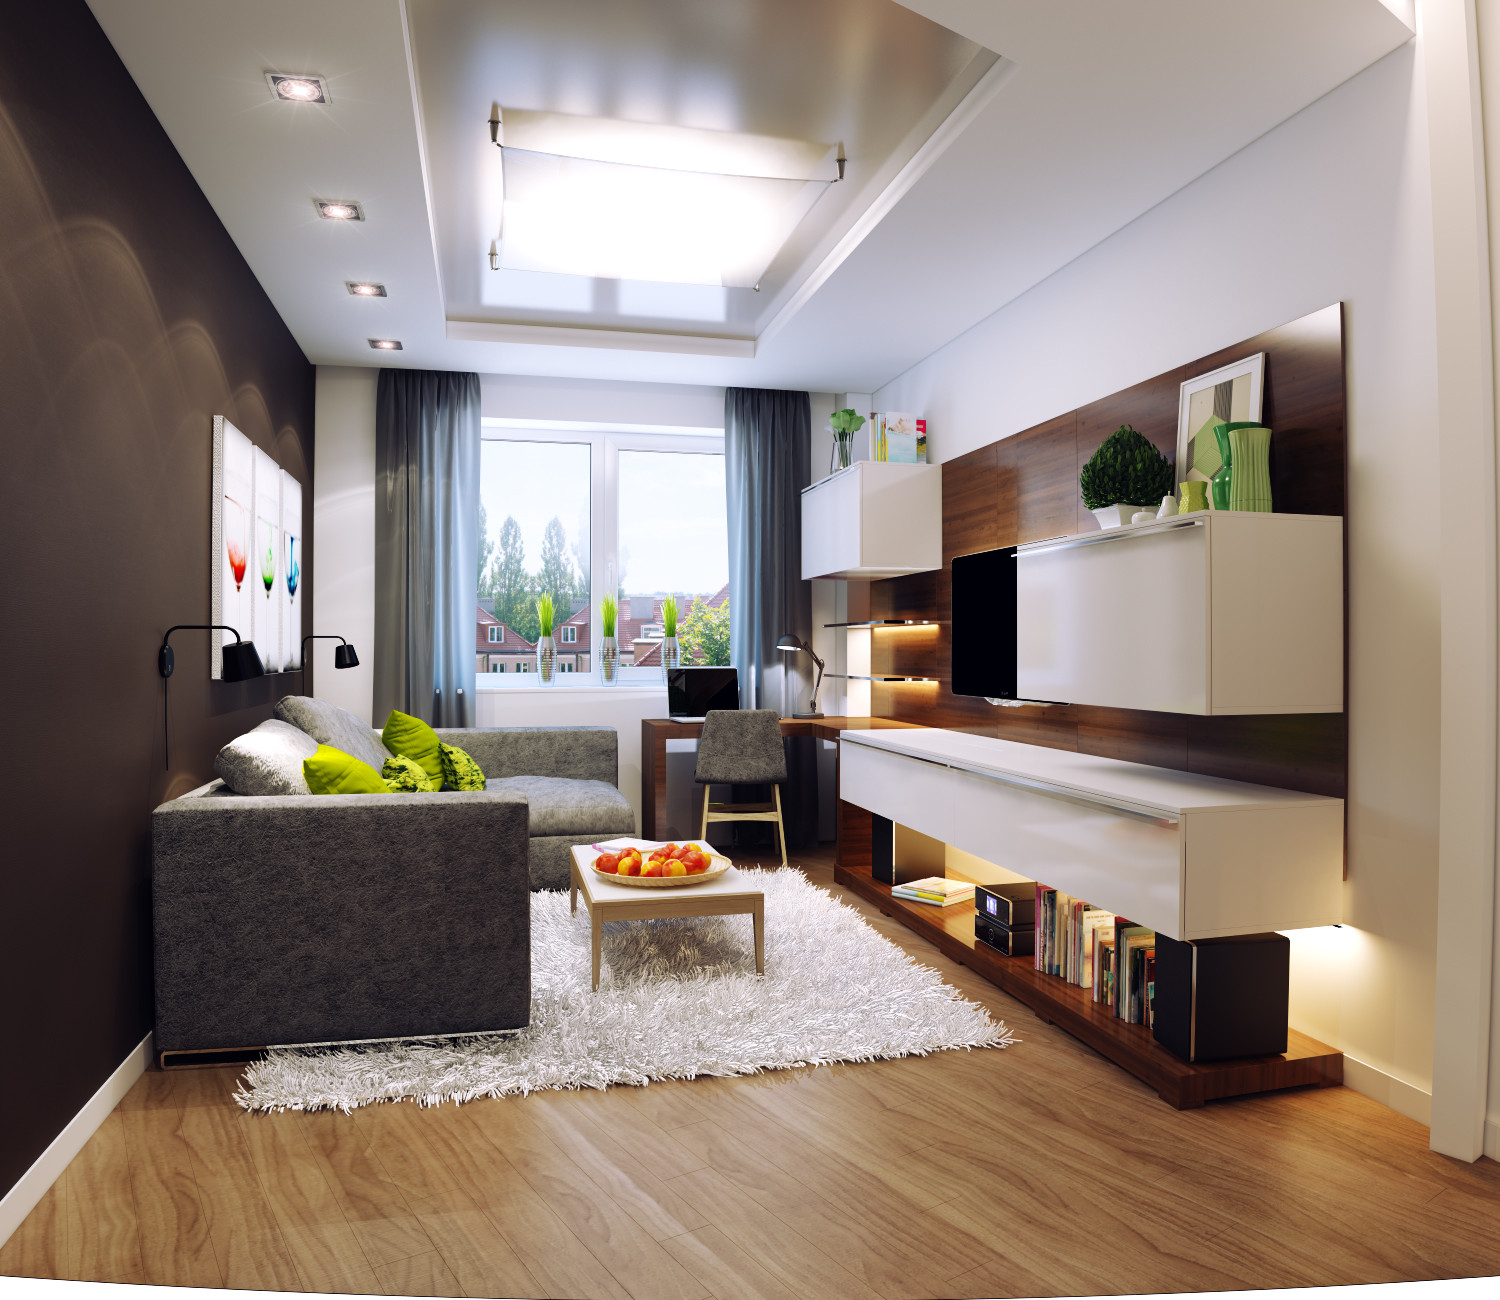 Small Living Room Design
 50 Best Small Living Room Design Ideas for 2020